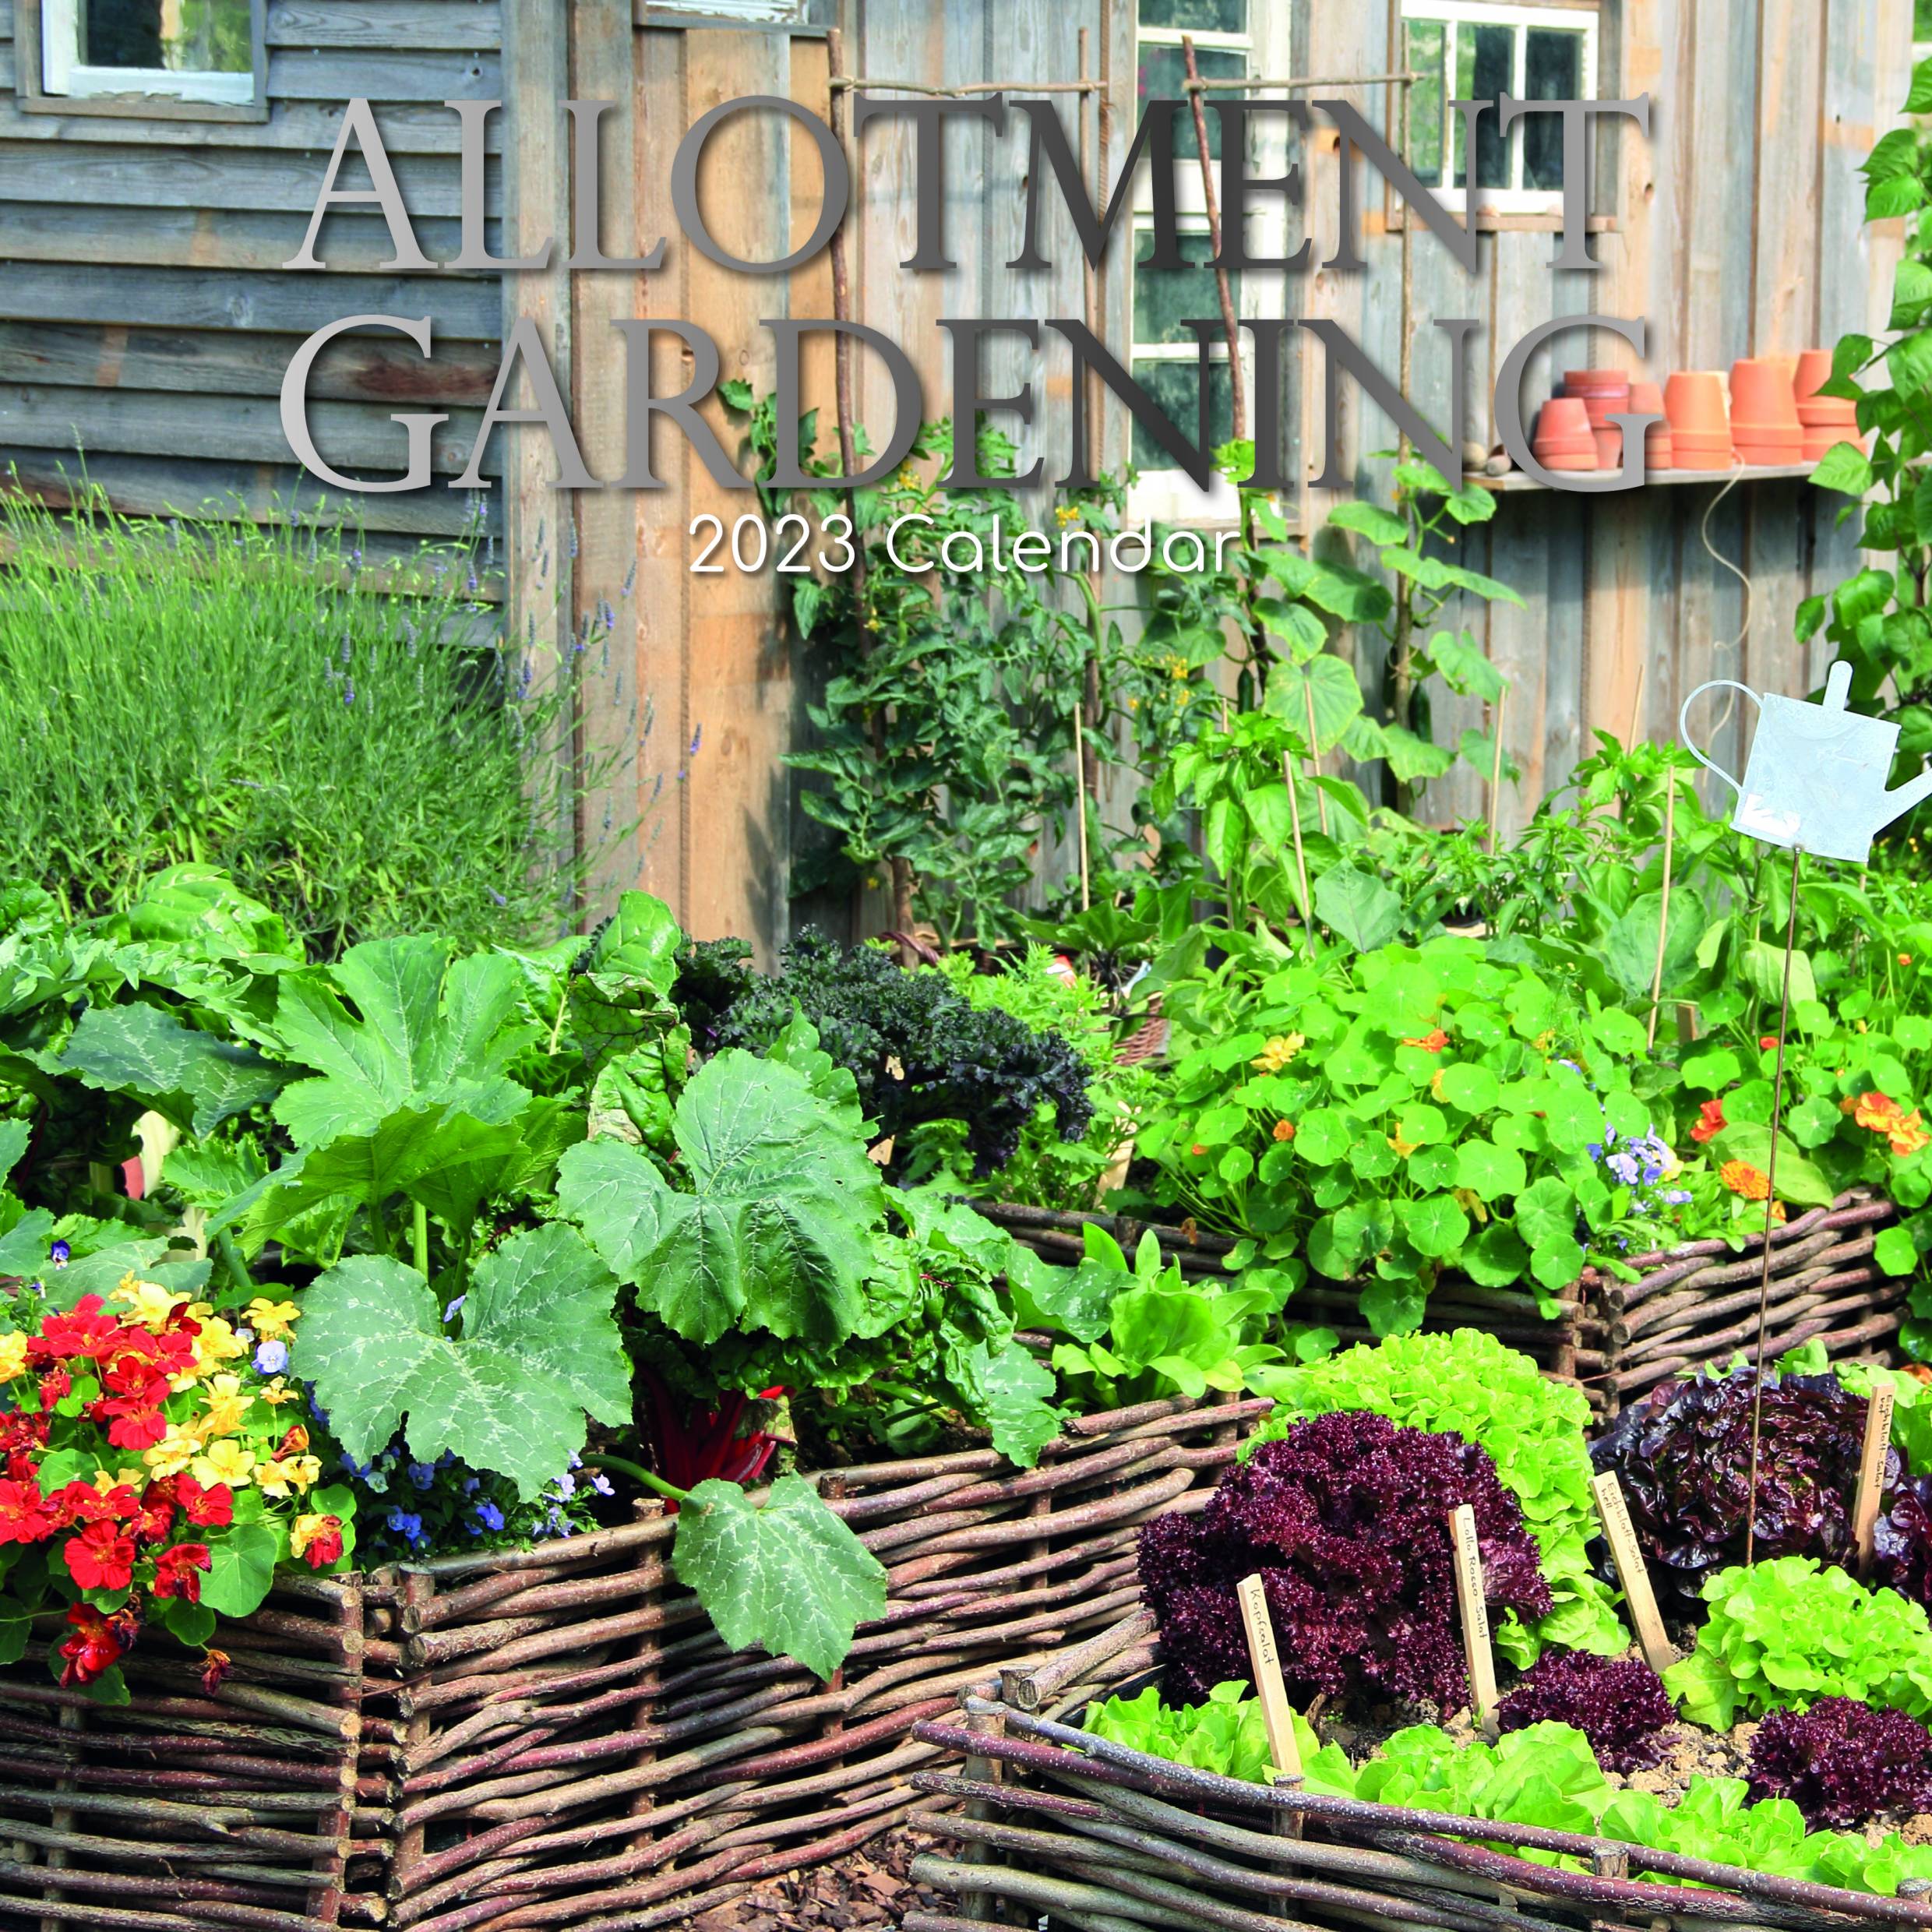 2023 Allotment Gardening - Square Wall Calendar